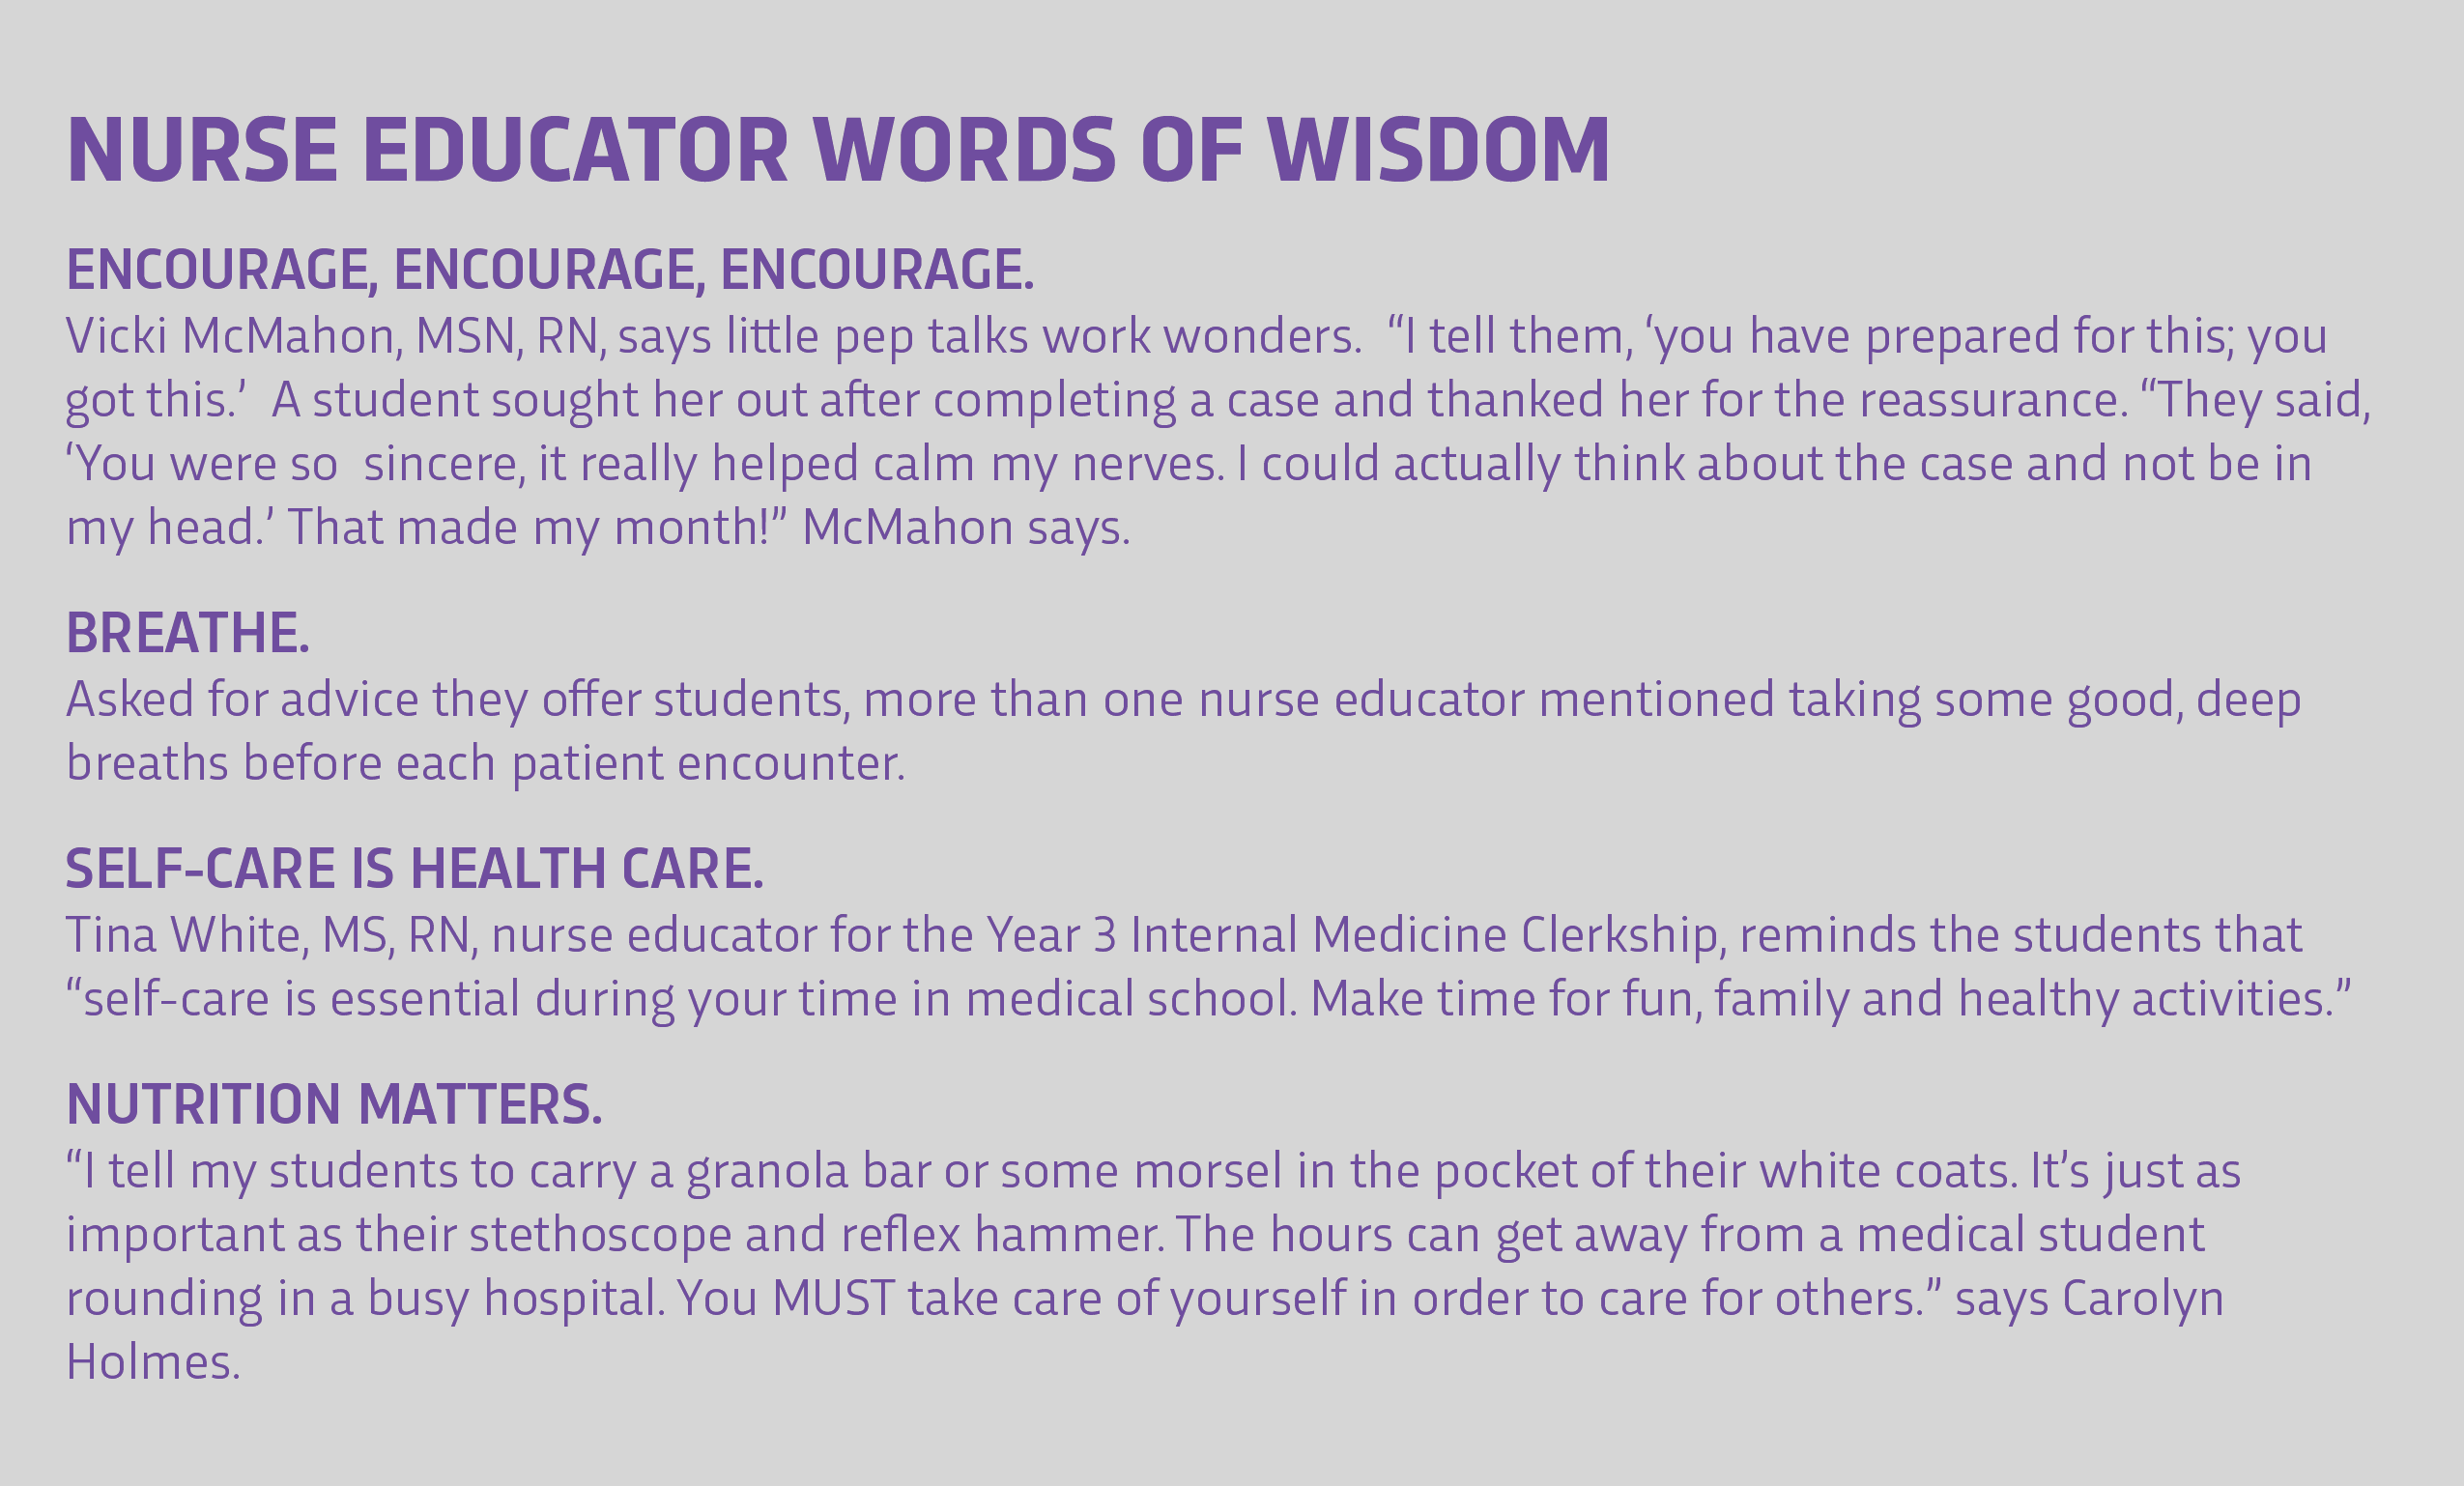 Nurse educator words of wisdom